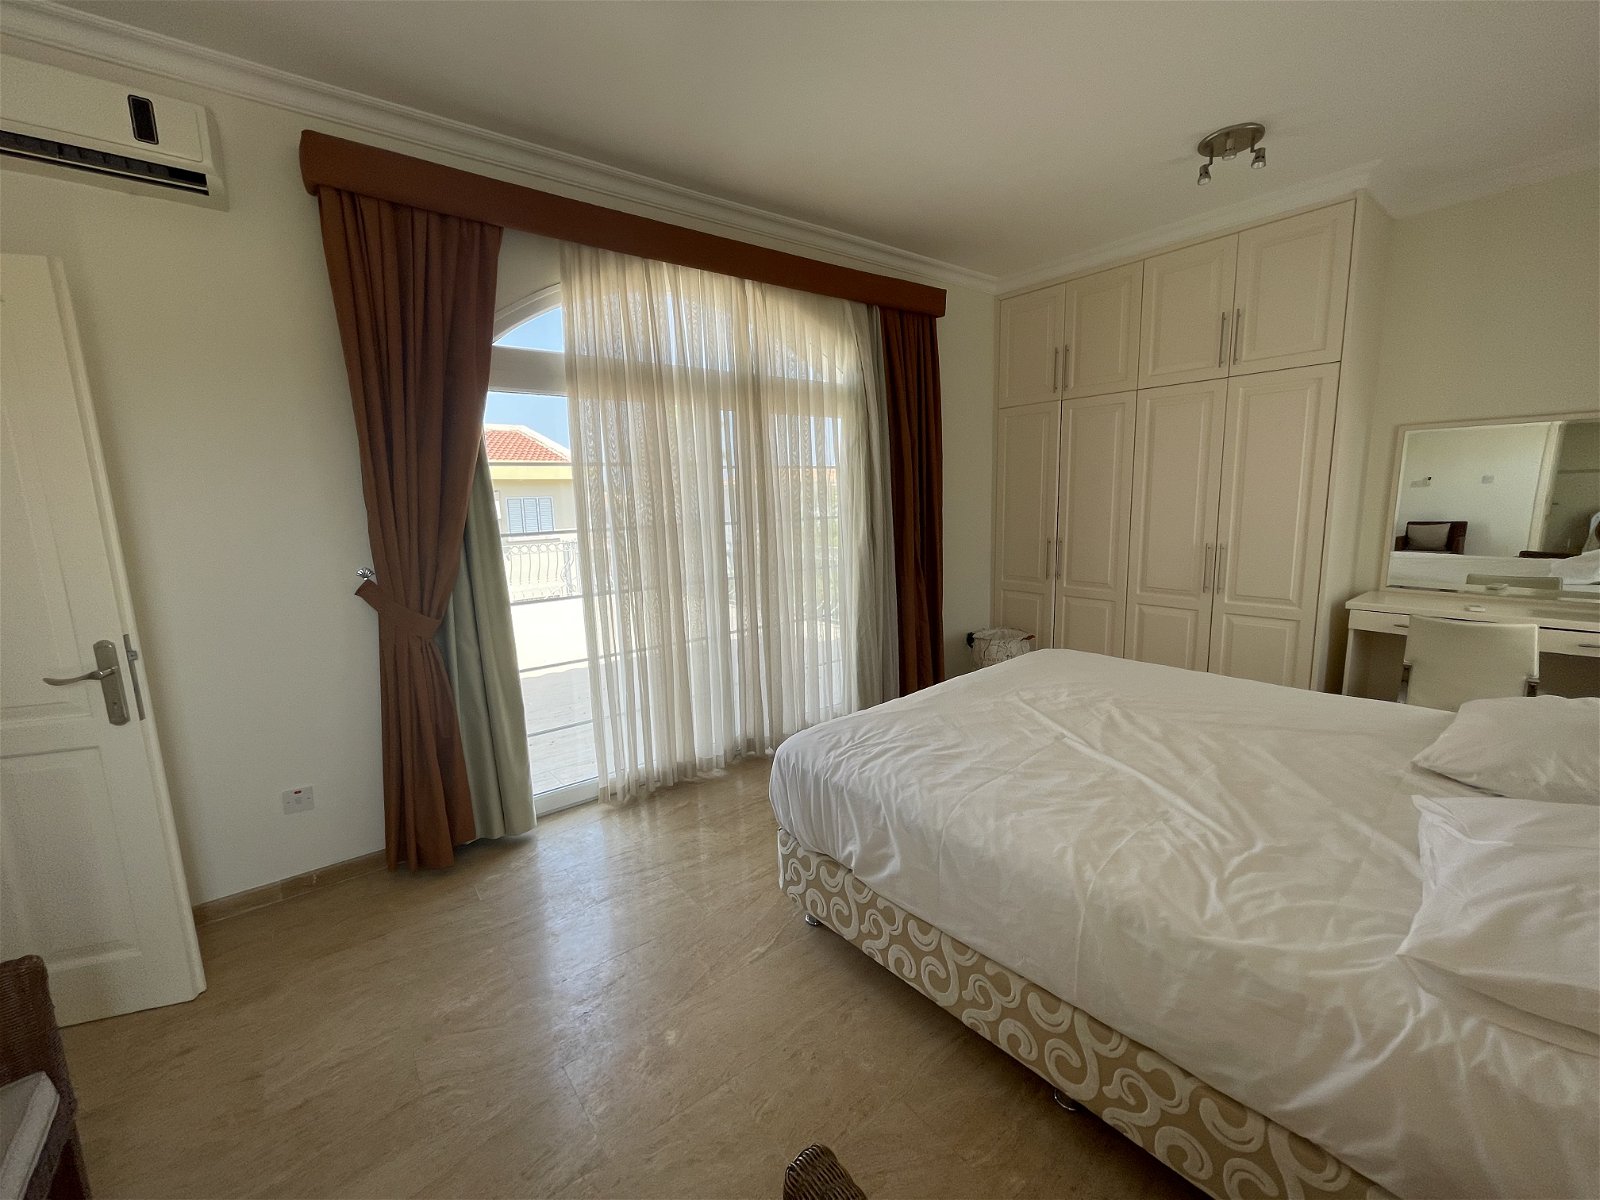 For Sale 3 +1 Turkish Deeded Villa in Karaoglanoglu Kyrenia-63d07885-49a9-4e8d-a441-13dd6c3d9c2b